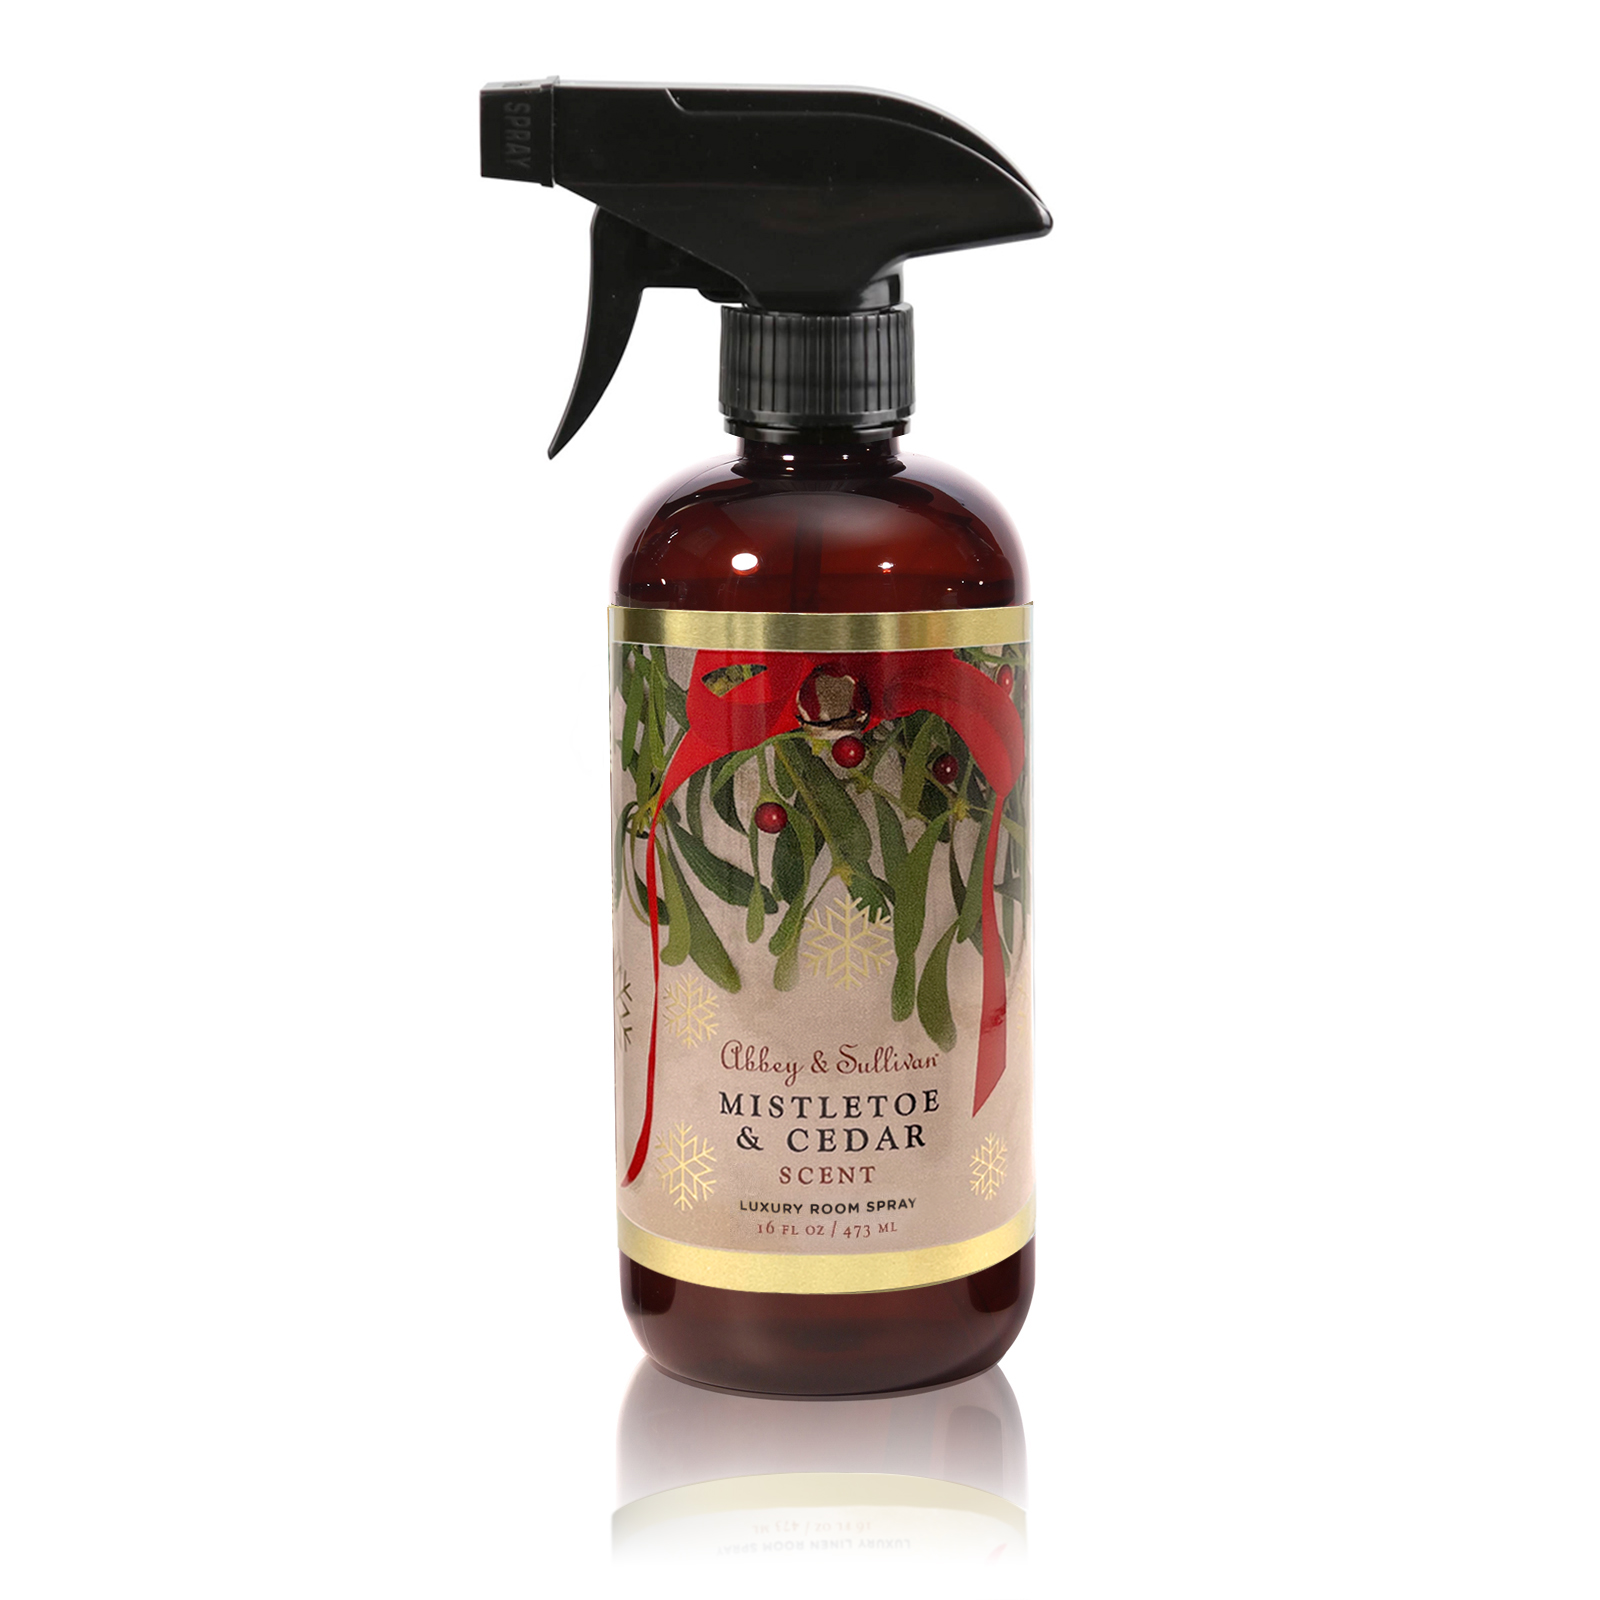 Best linen and room sprays - Mistletoe & Cedar